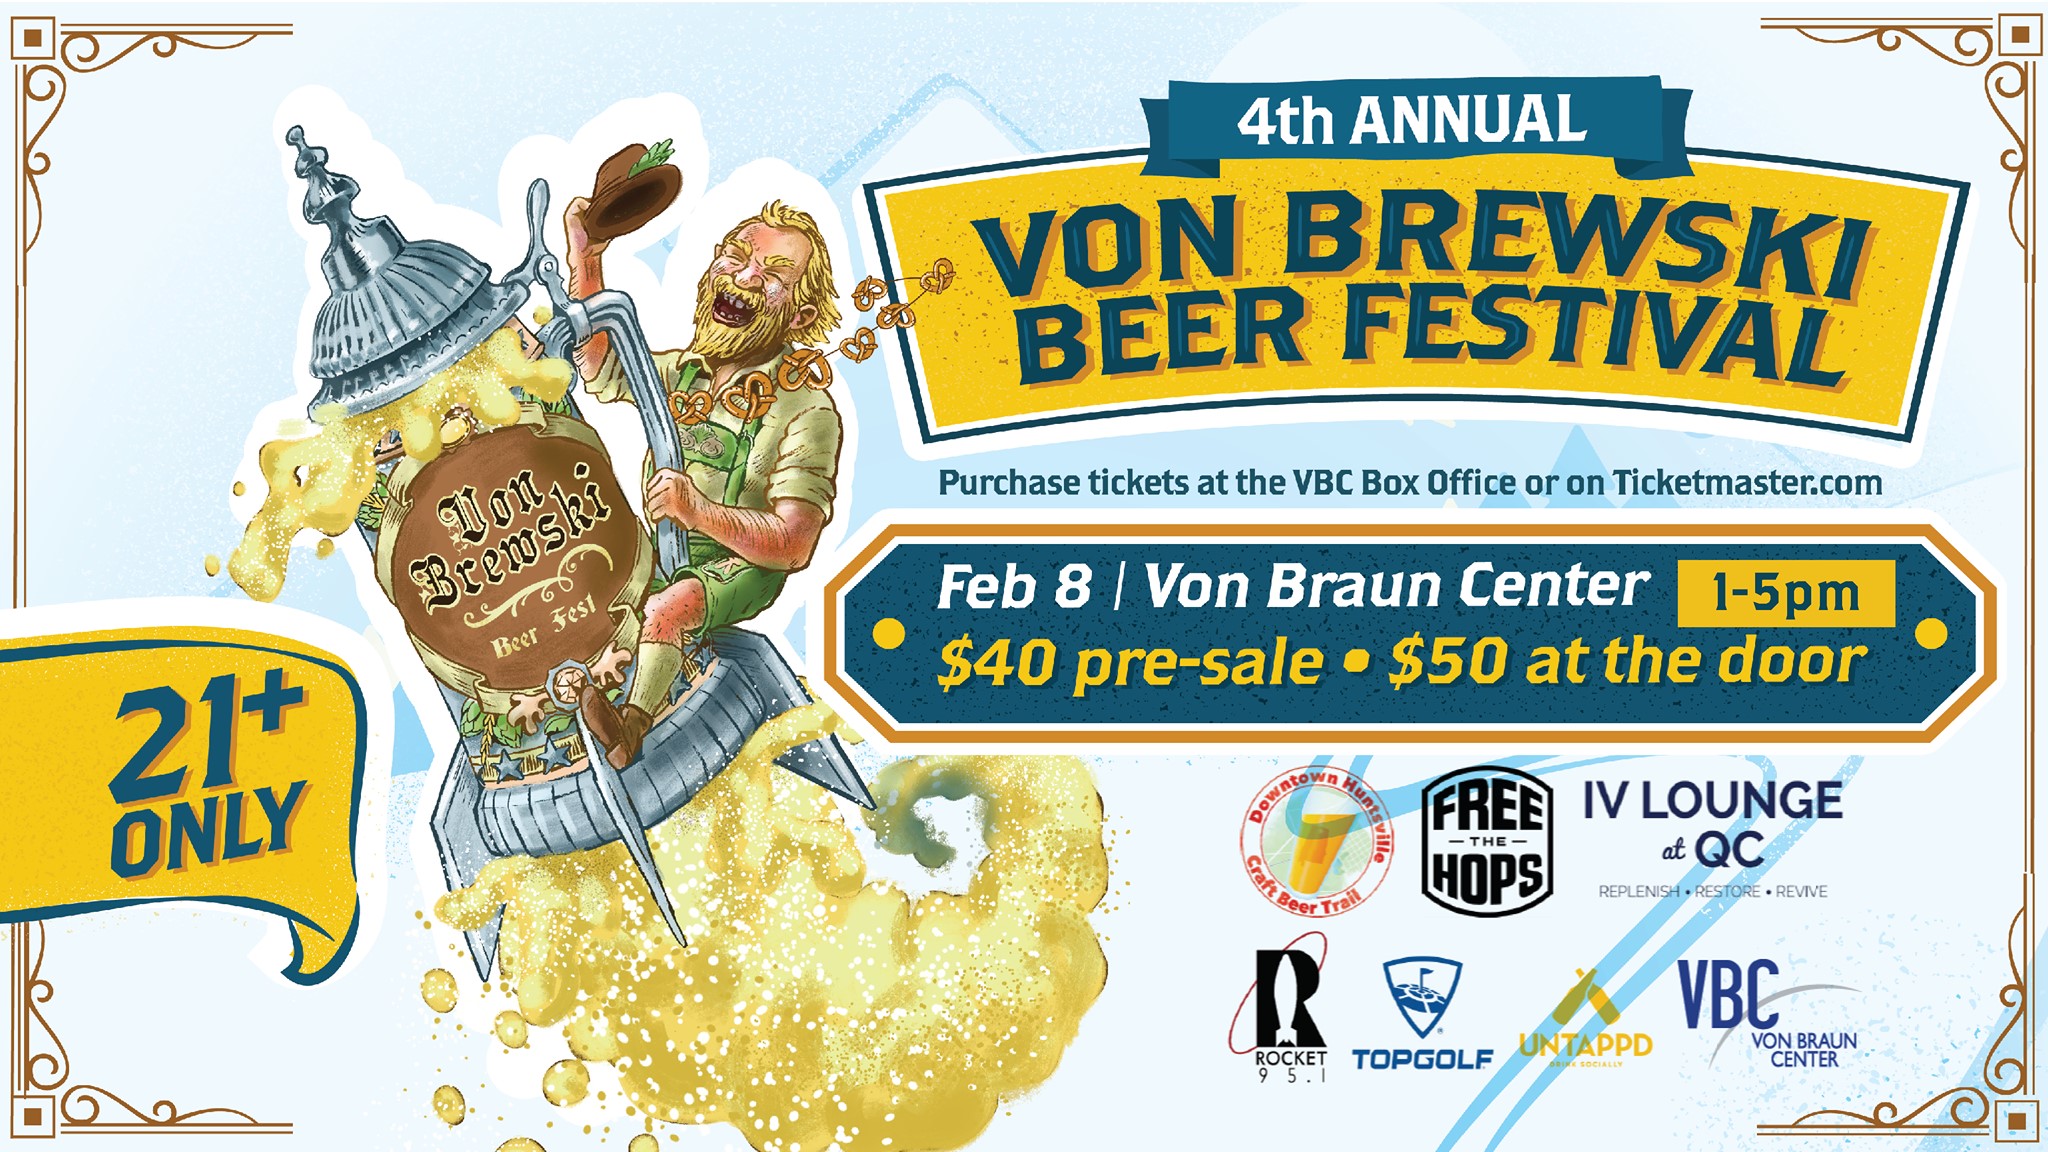 von brewksi beer festival poster in huntsville alabama 